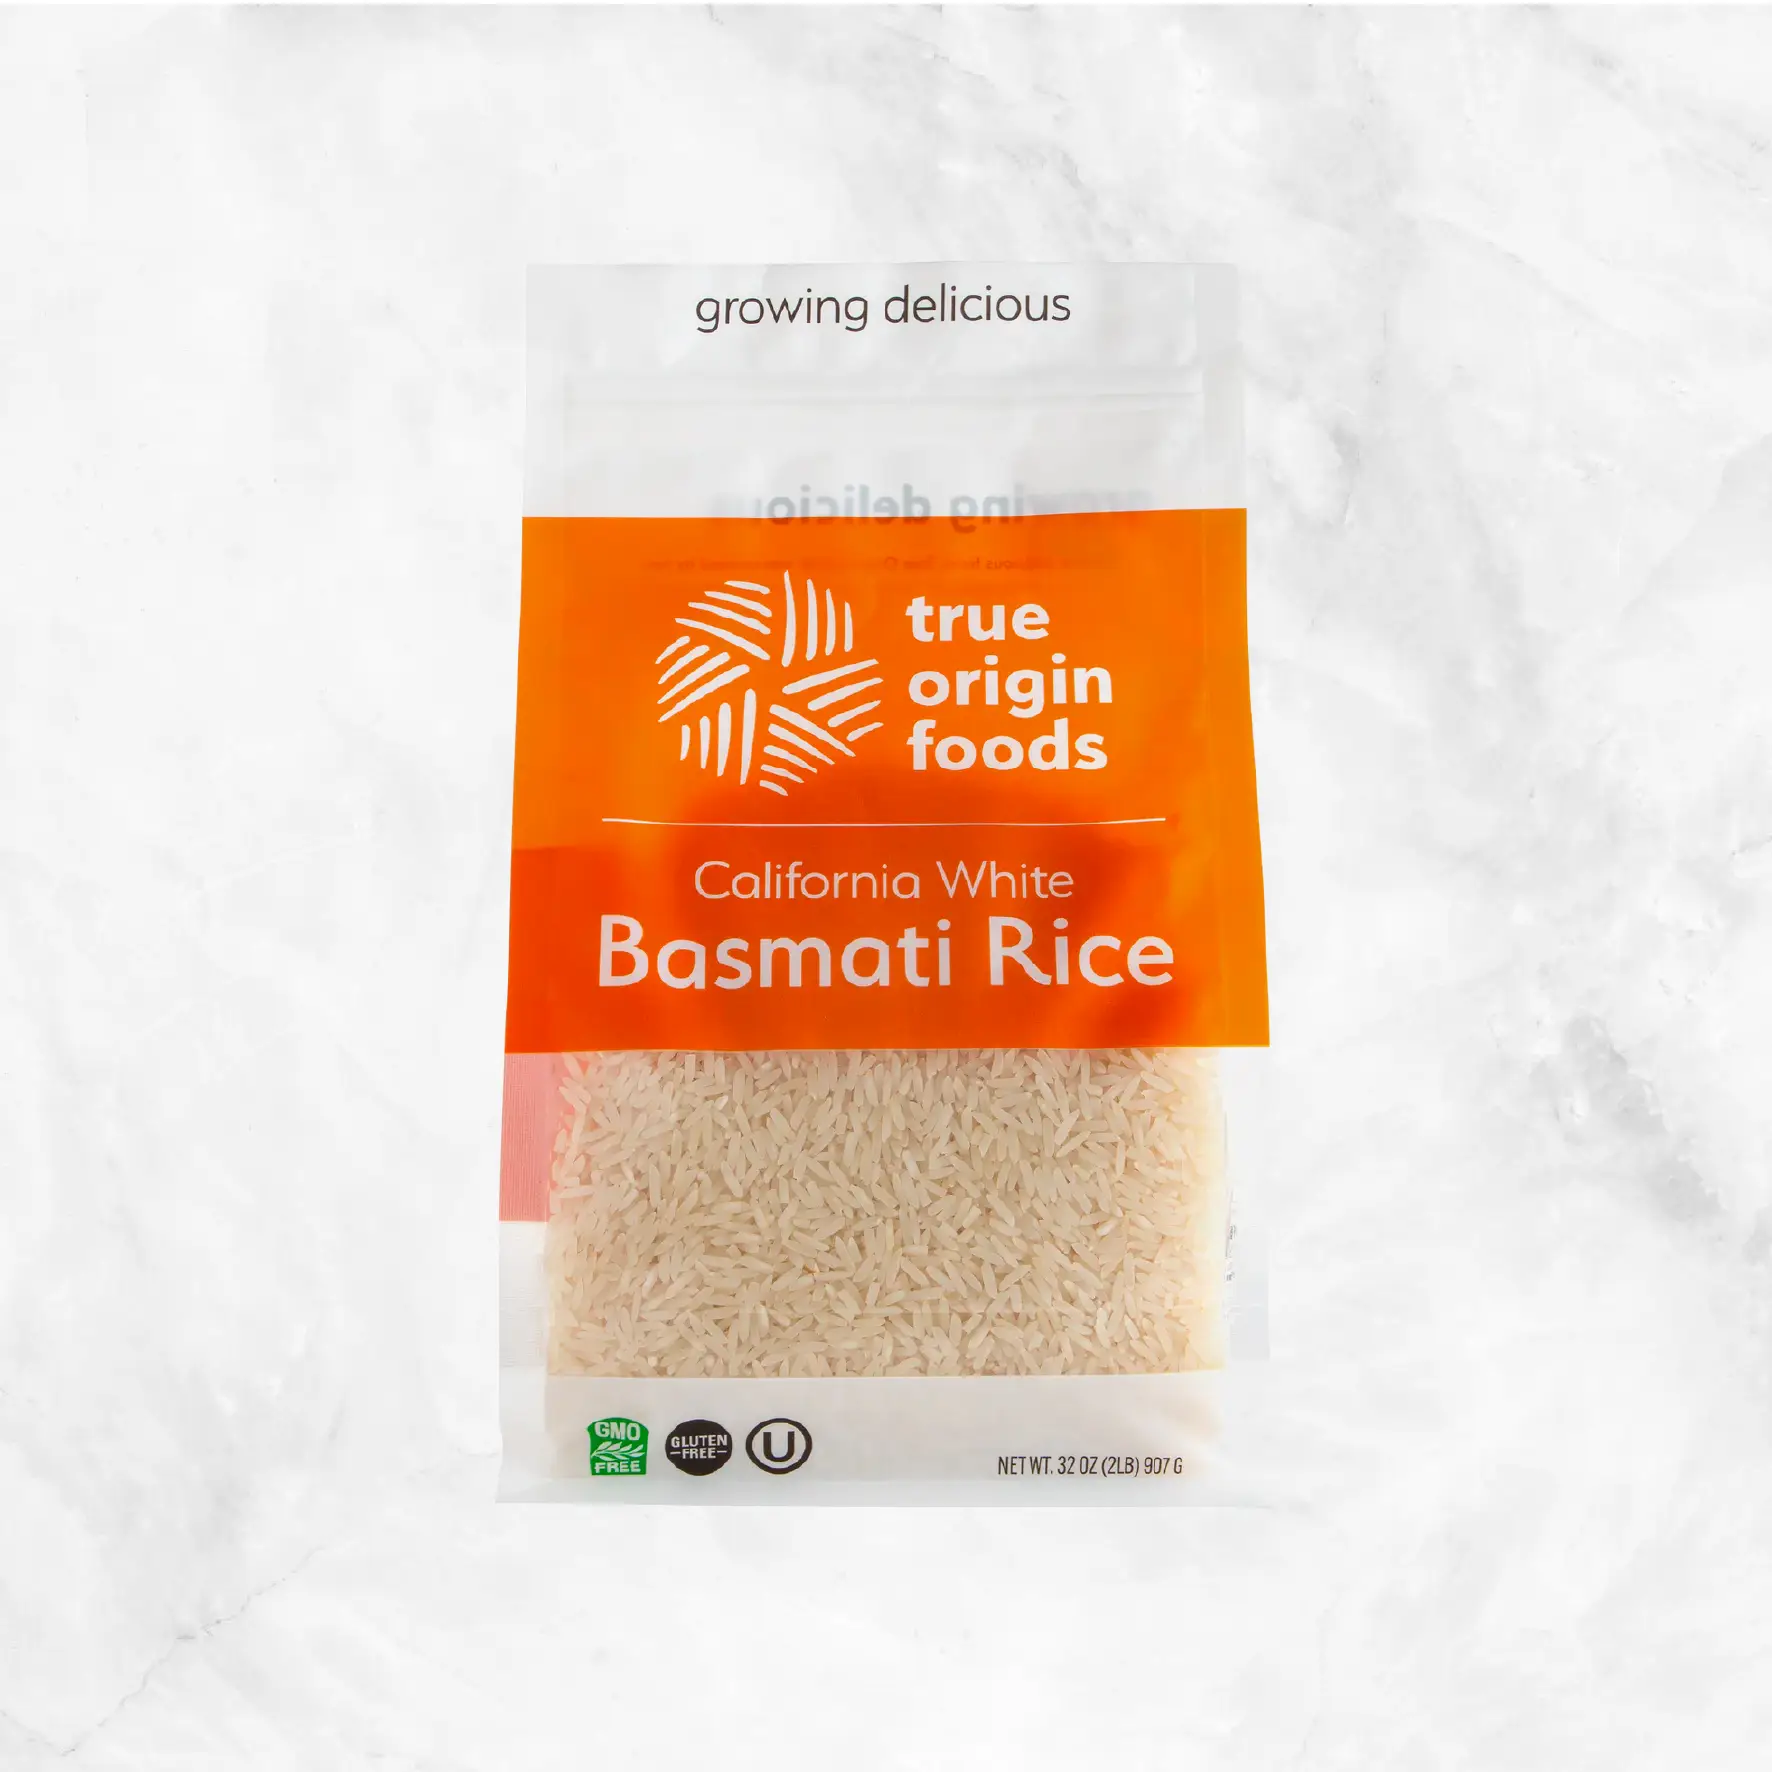 Basmati Rice Delivery